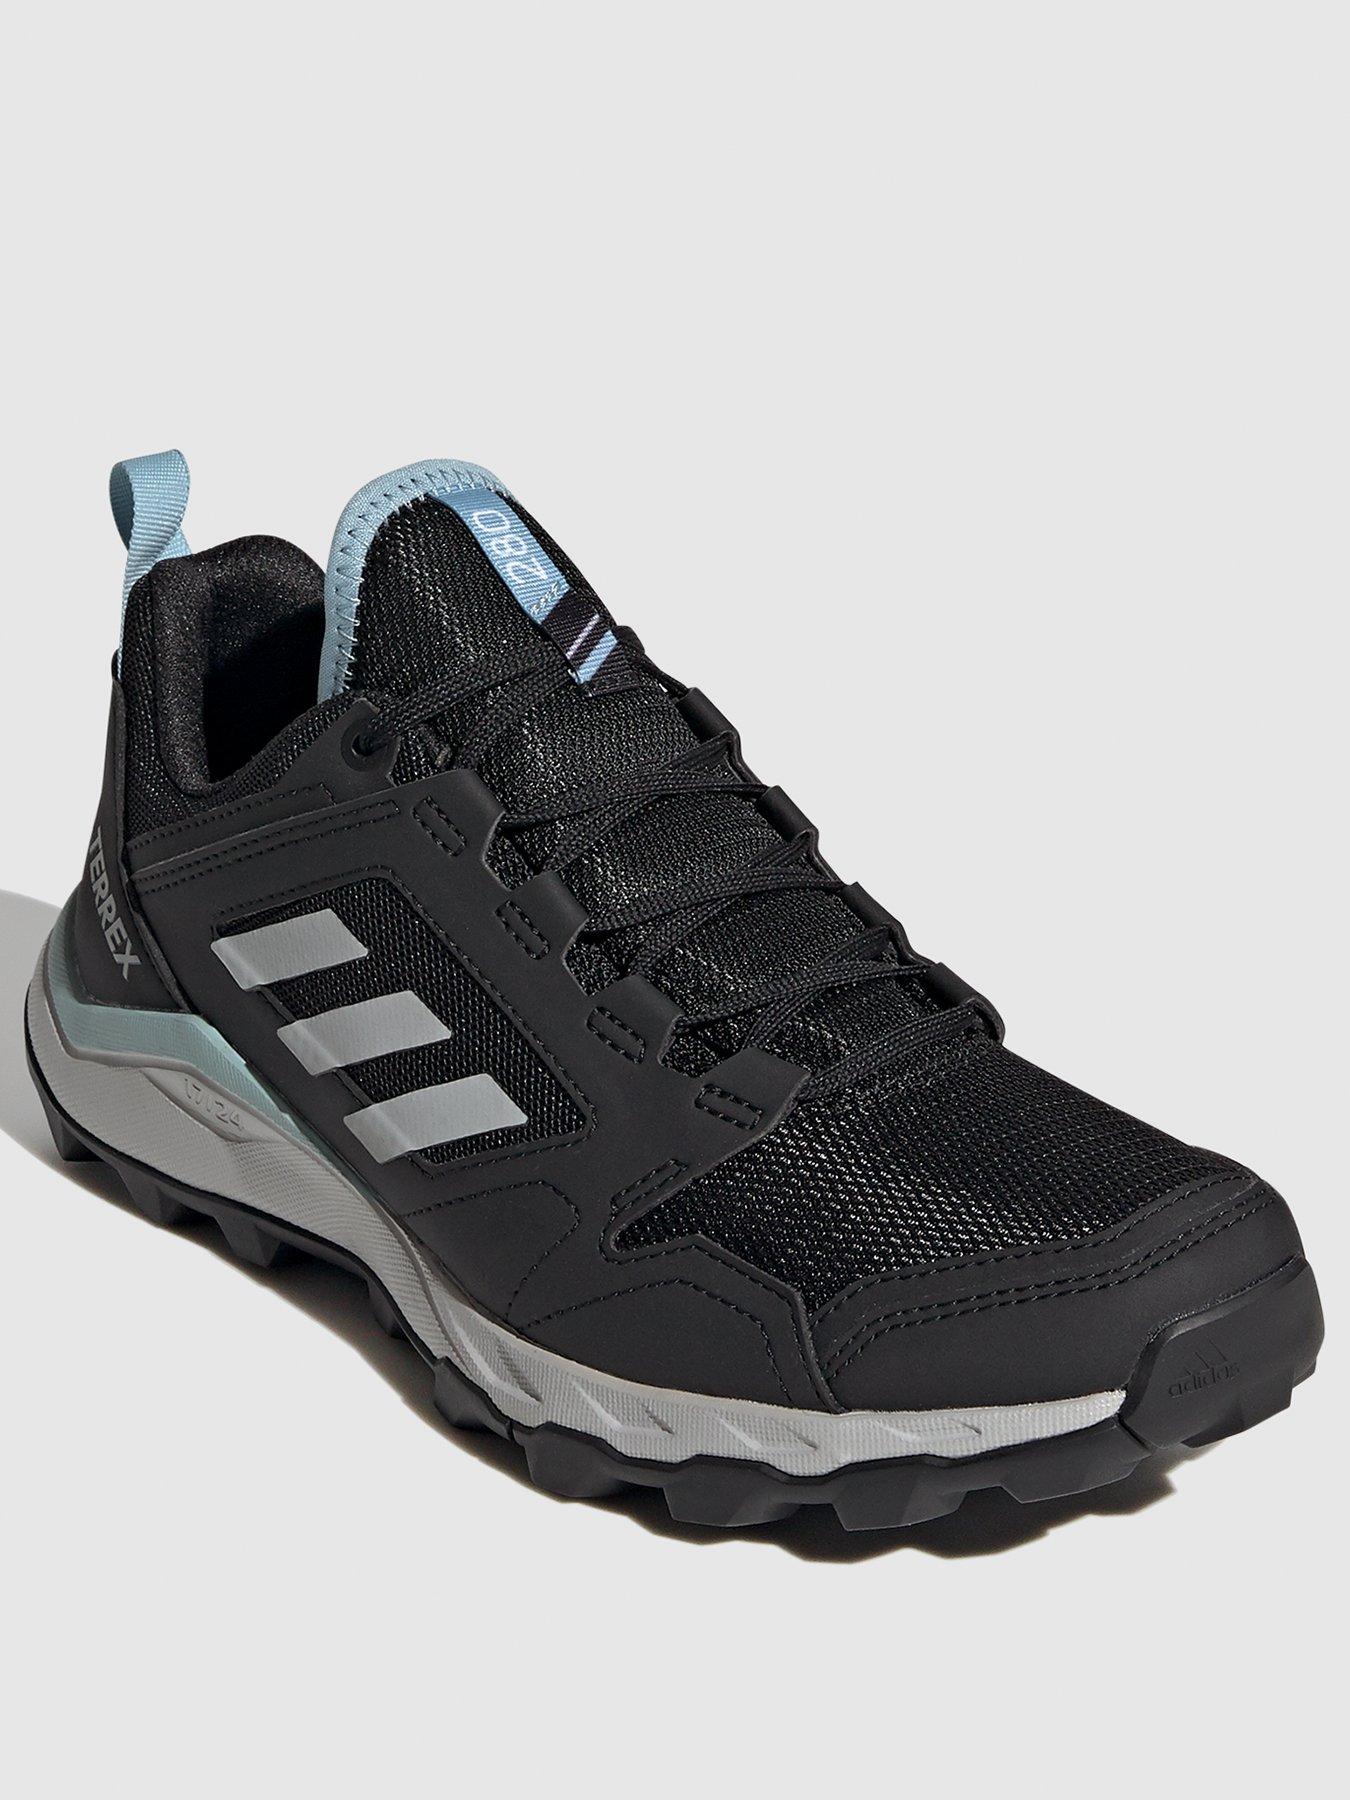 adidas walking shoes black